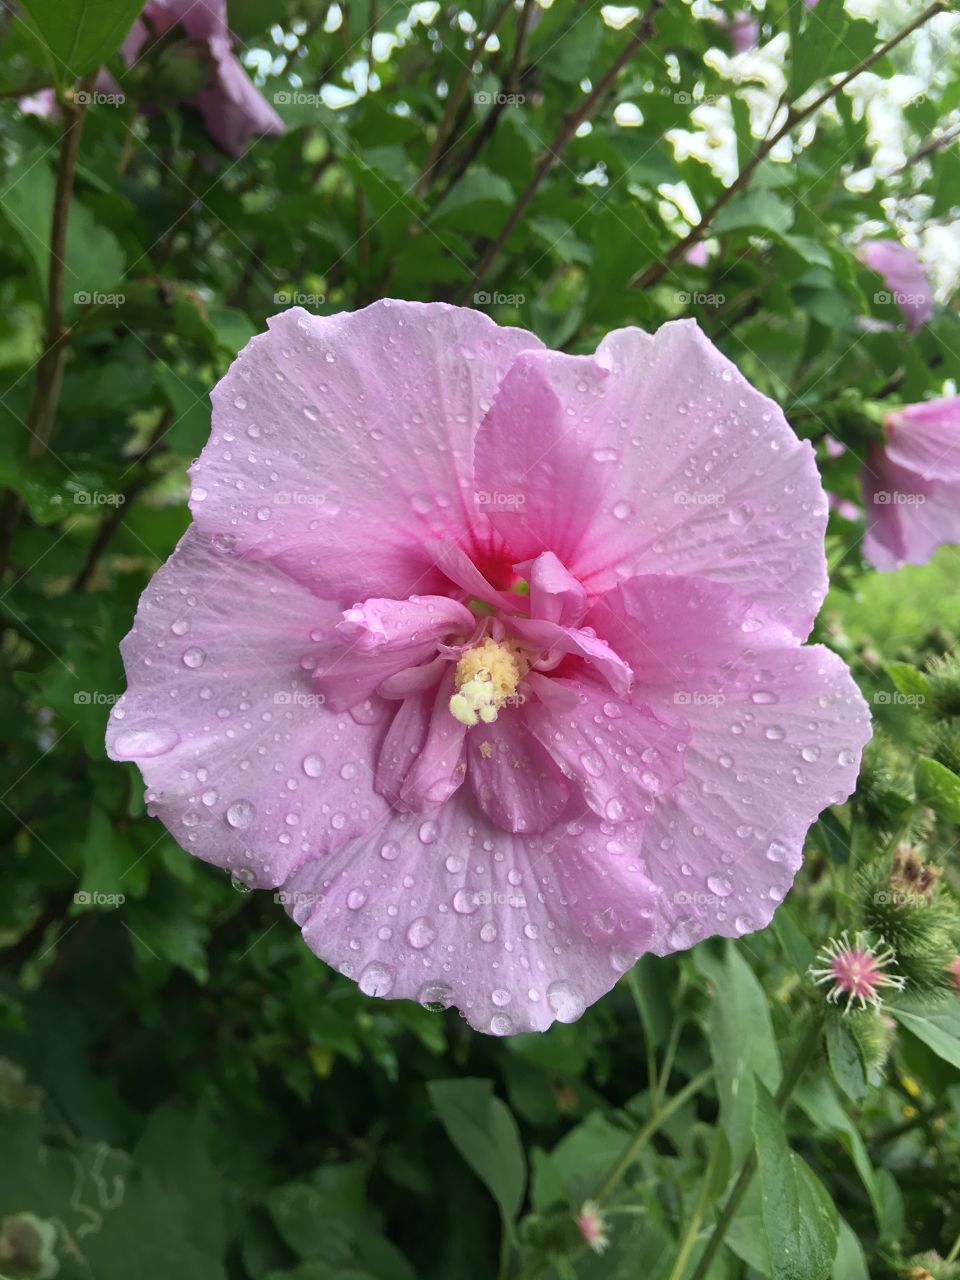 Light rainfall on pretty pink flower 